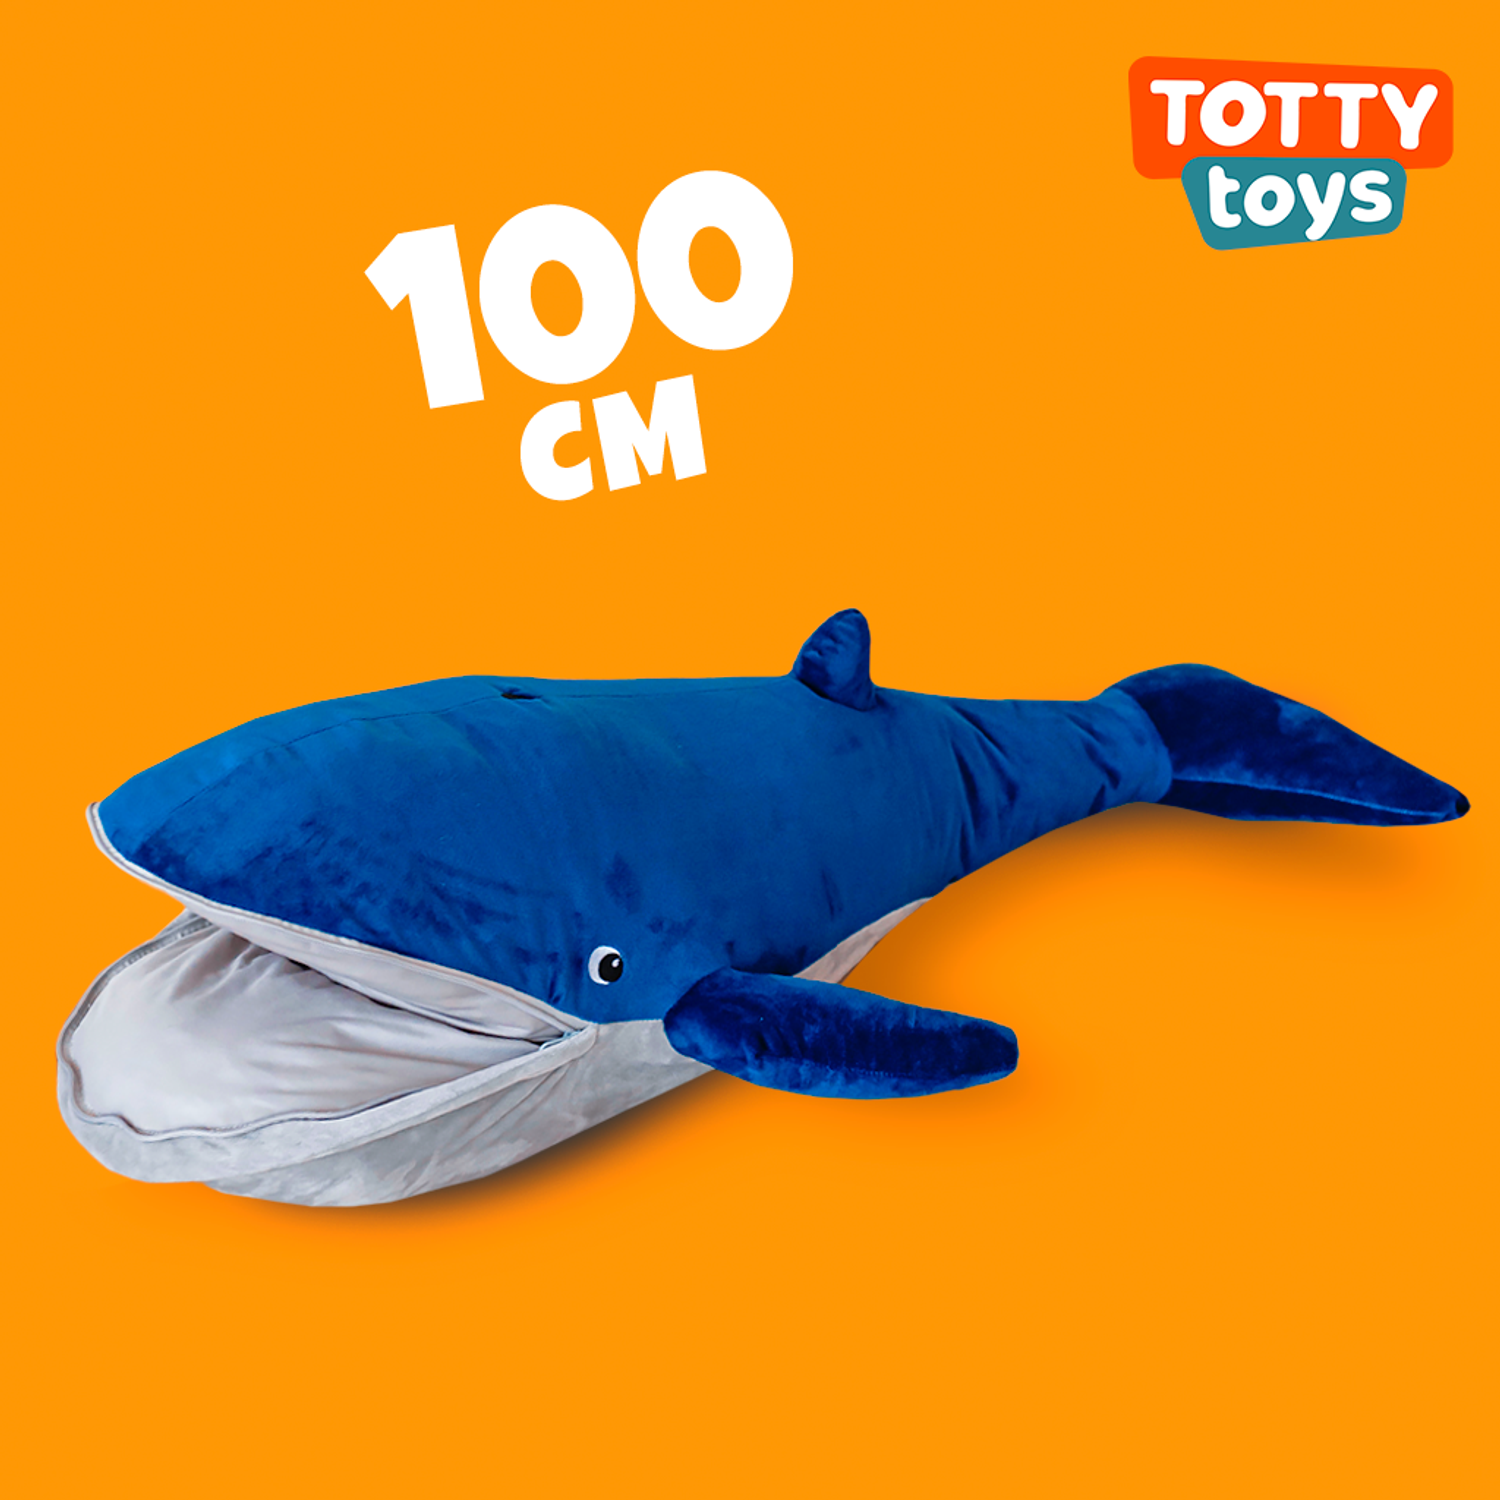 Мягкая игрушка TOTTY TOYS кит 100 см подушка развивающая антистресс - фото 1